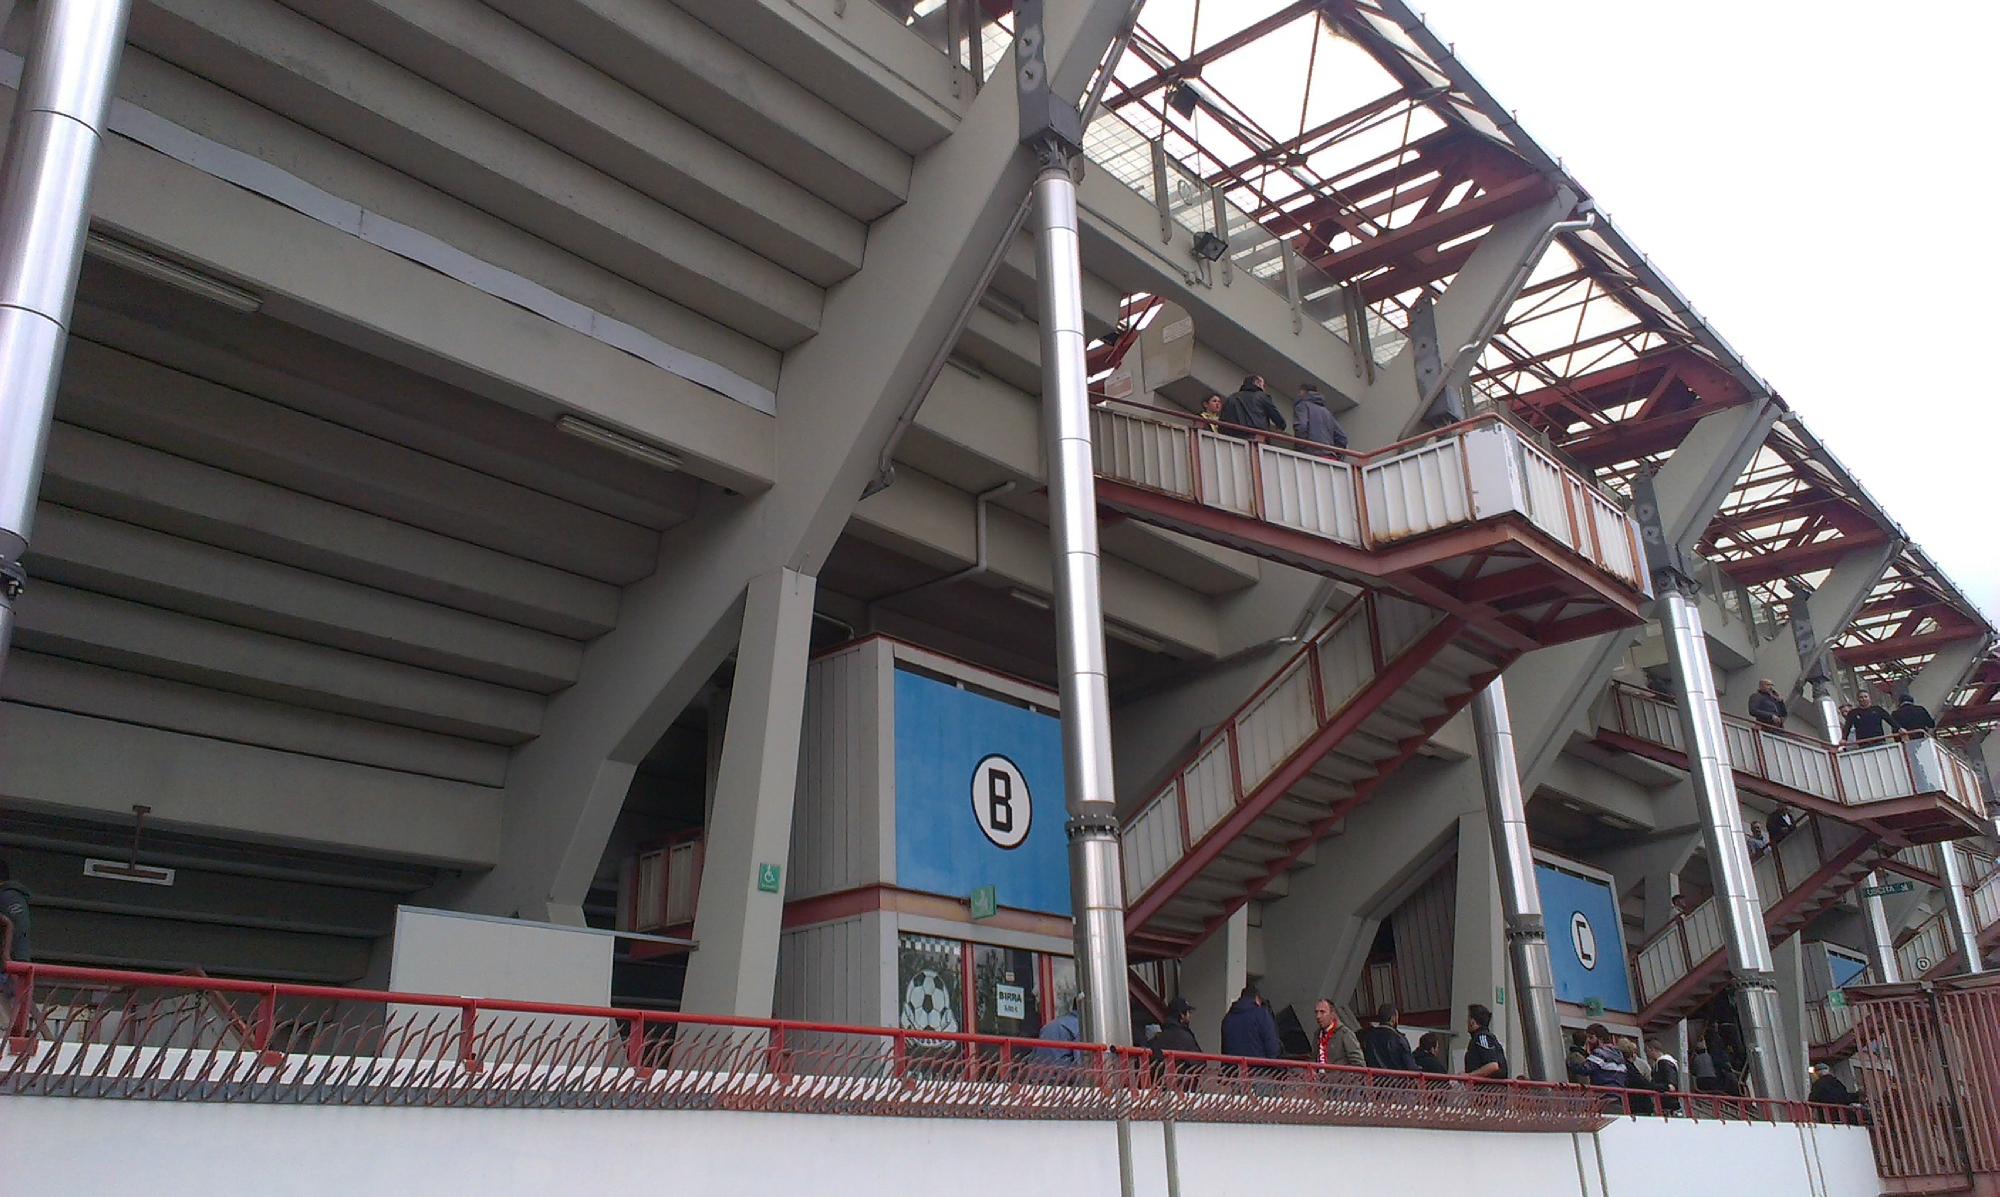 Orogel Stadium Dino Manuzzi